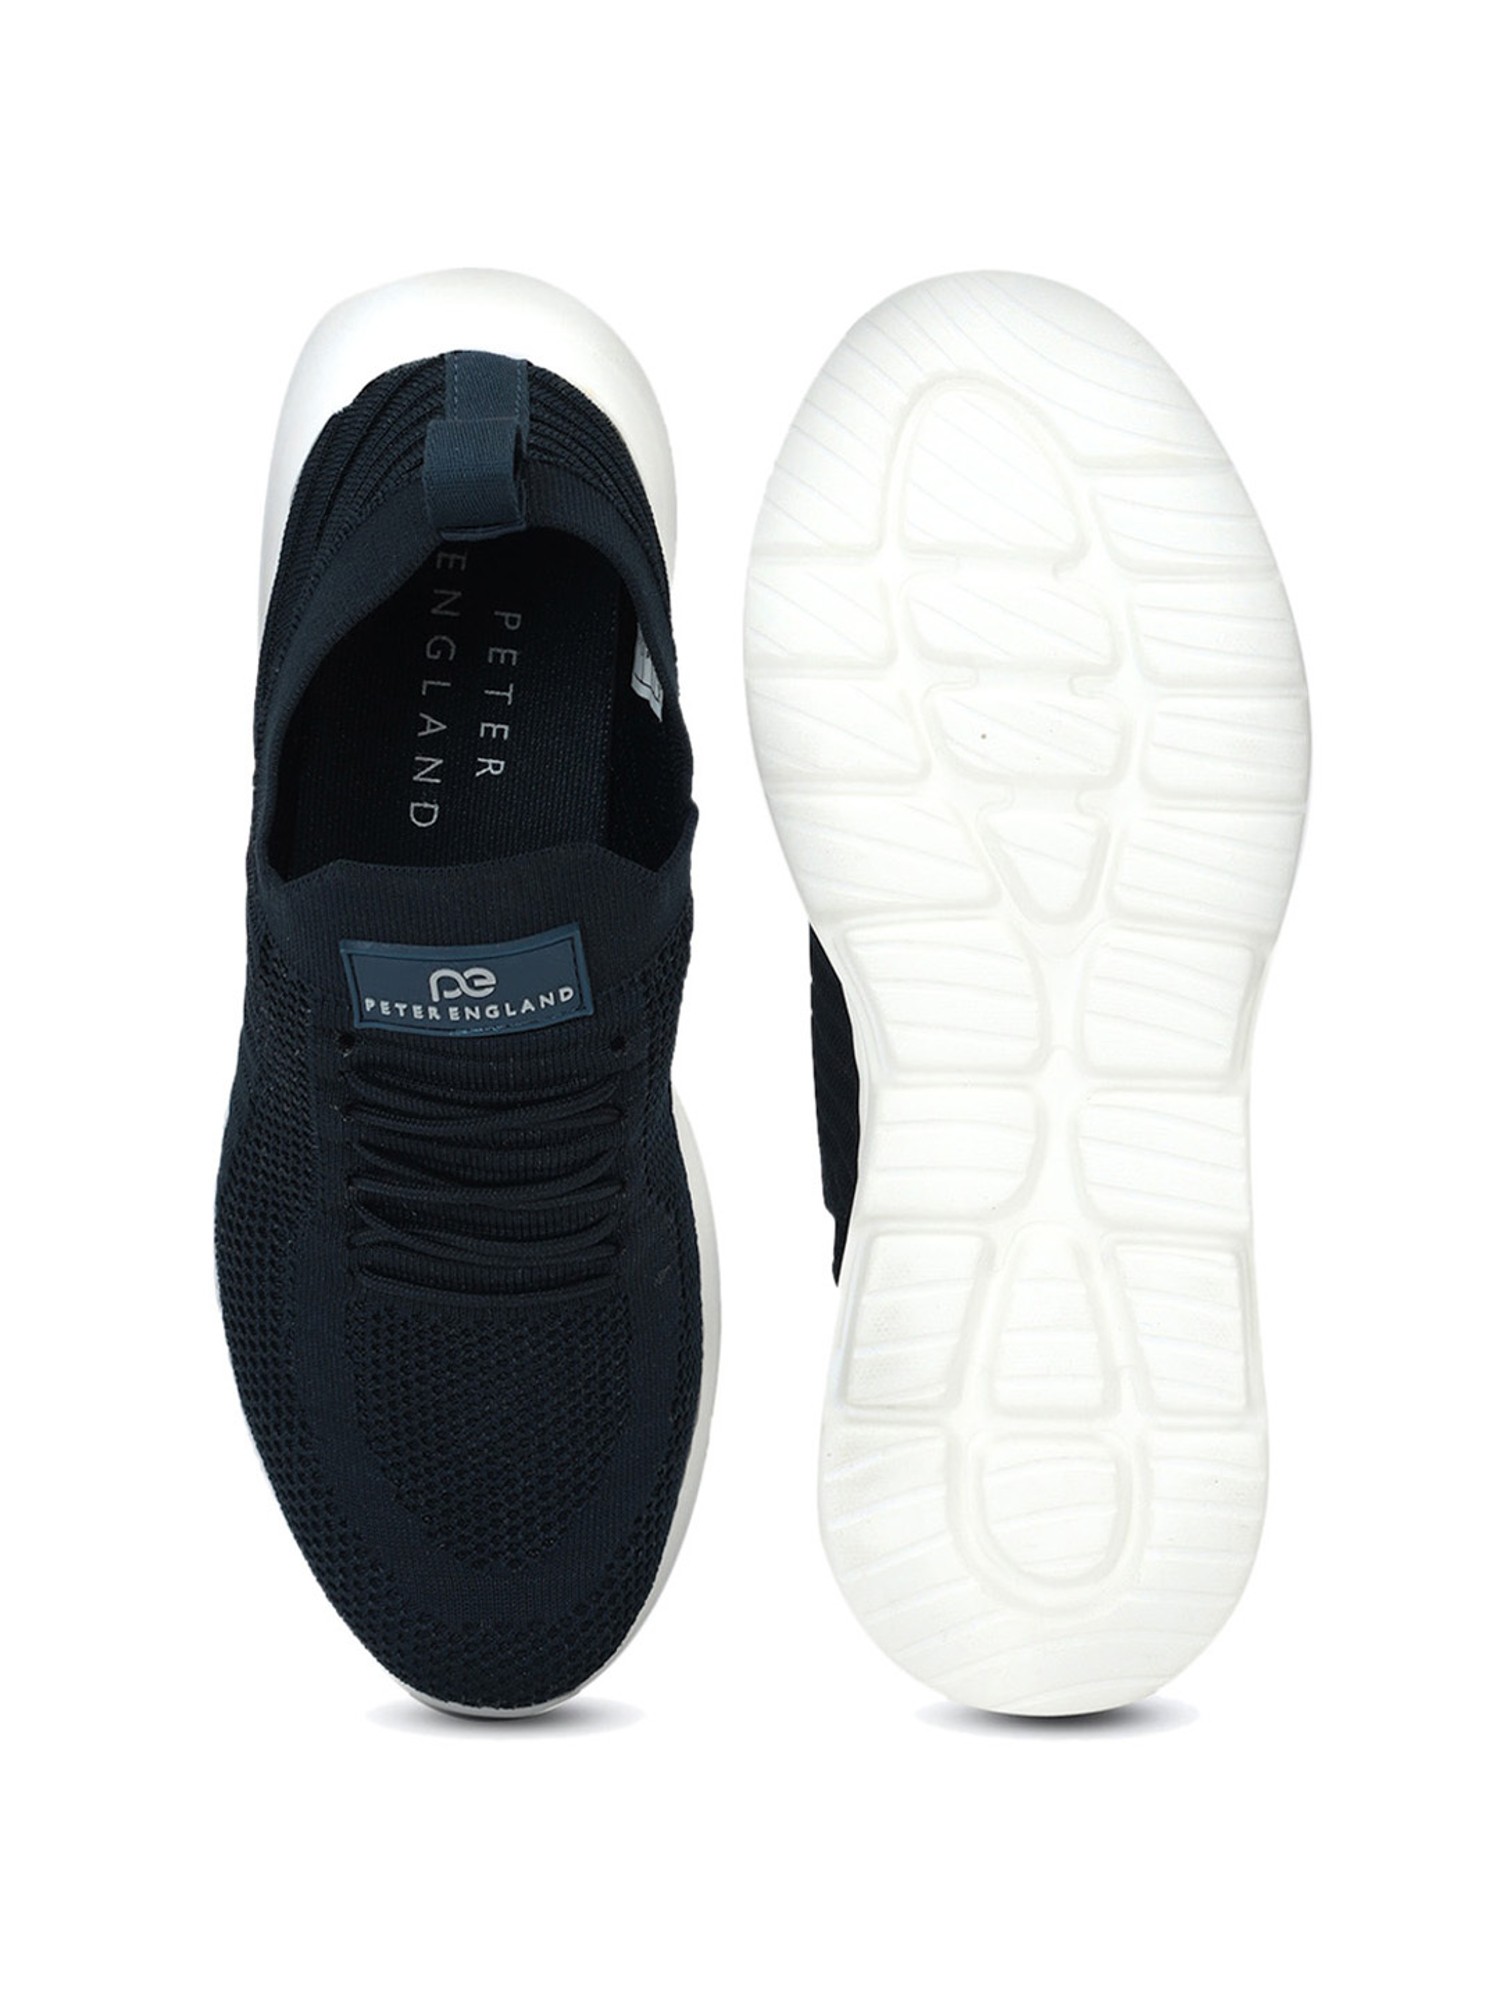 Buy Men Black Lace Up Shoes Online - 786195 | Peter England